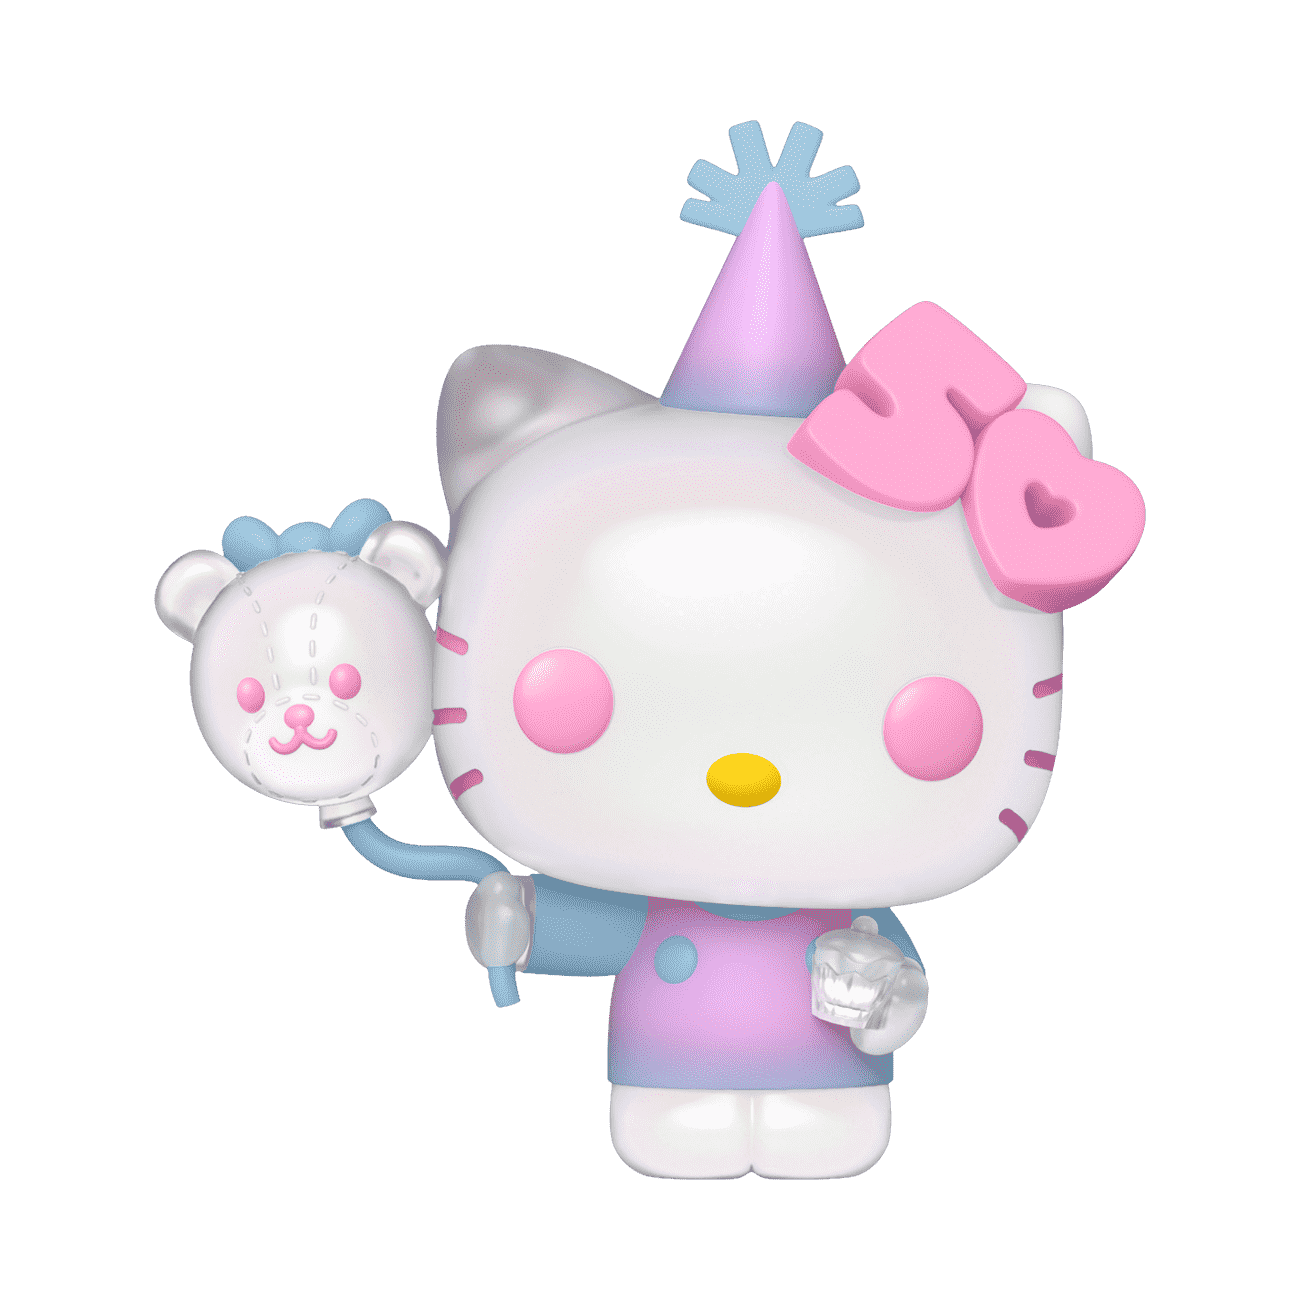 Funko POP! Hello Kitty 50th Anniversary: Hello Kitty w/ Balloons